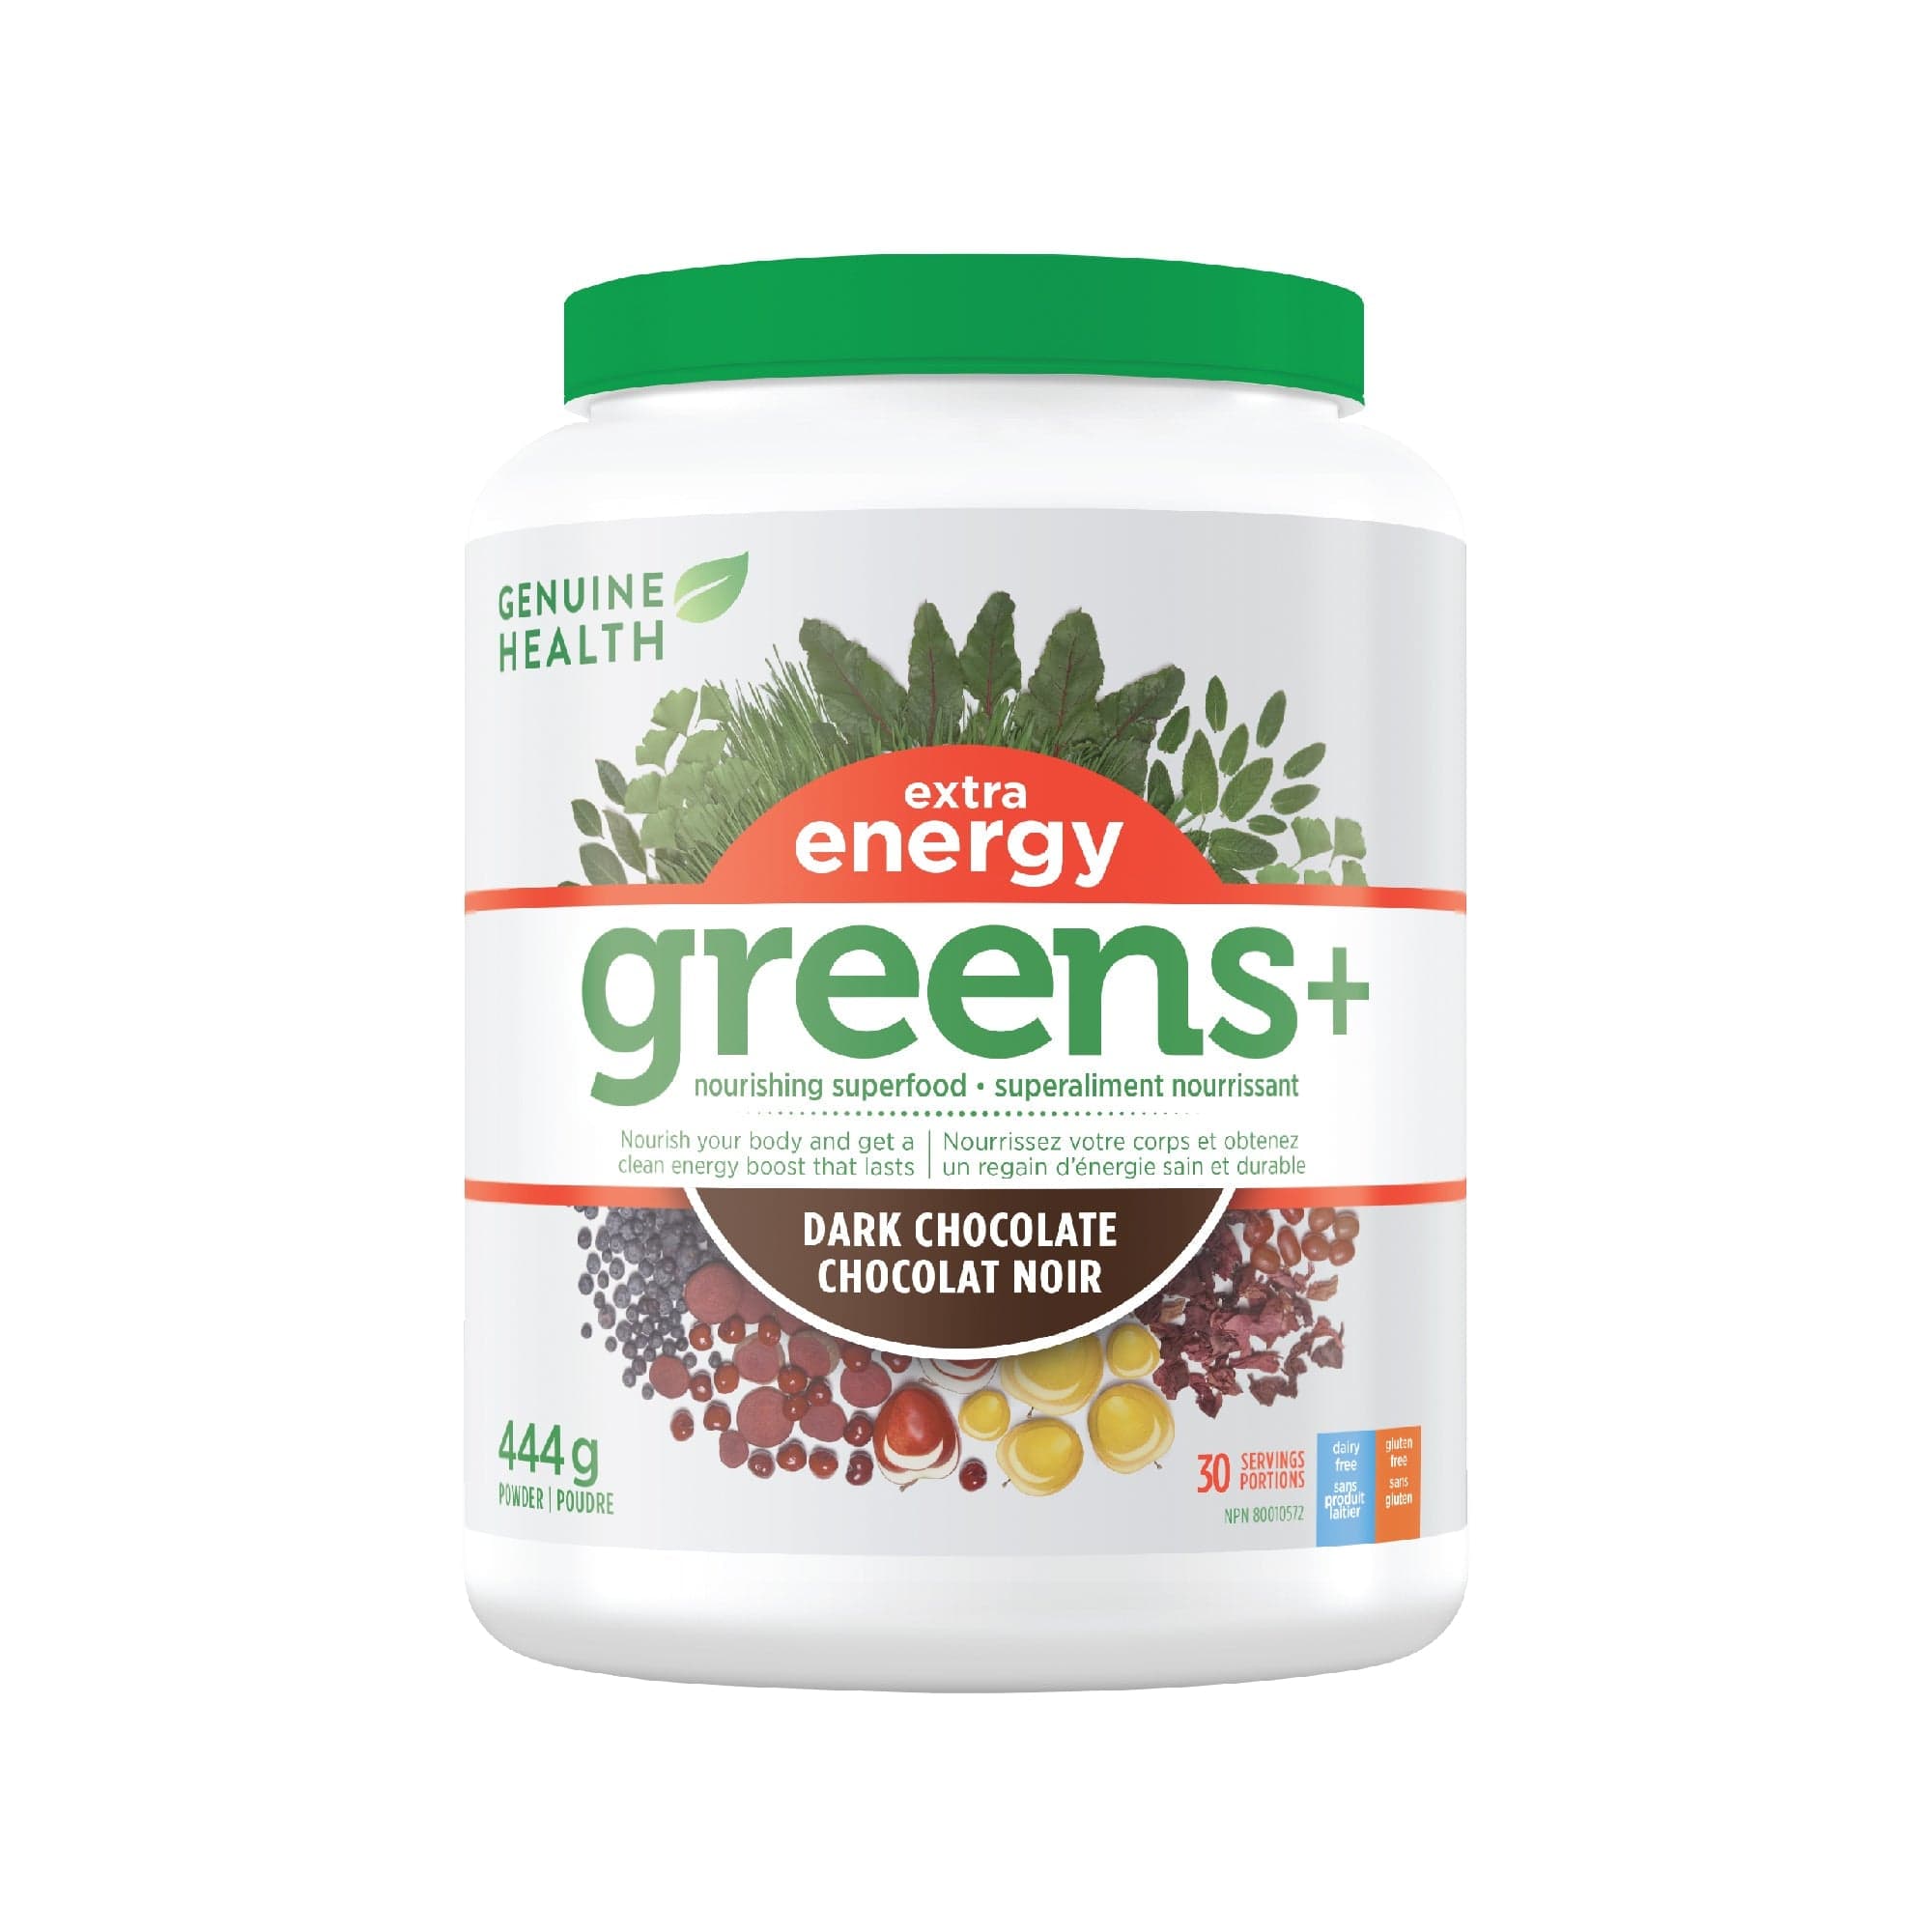 GENUINE HEALTH Suppléments Green + extra energy (chocolat noir) 444g